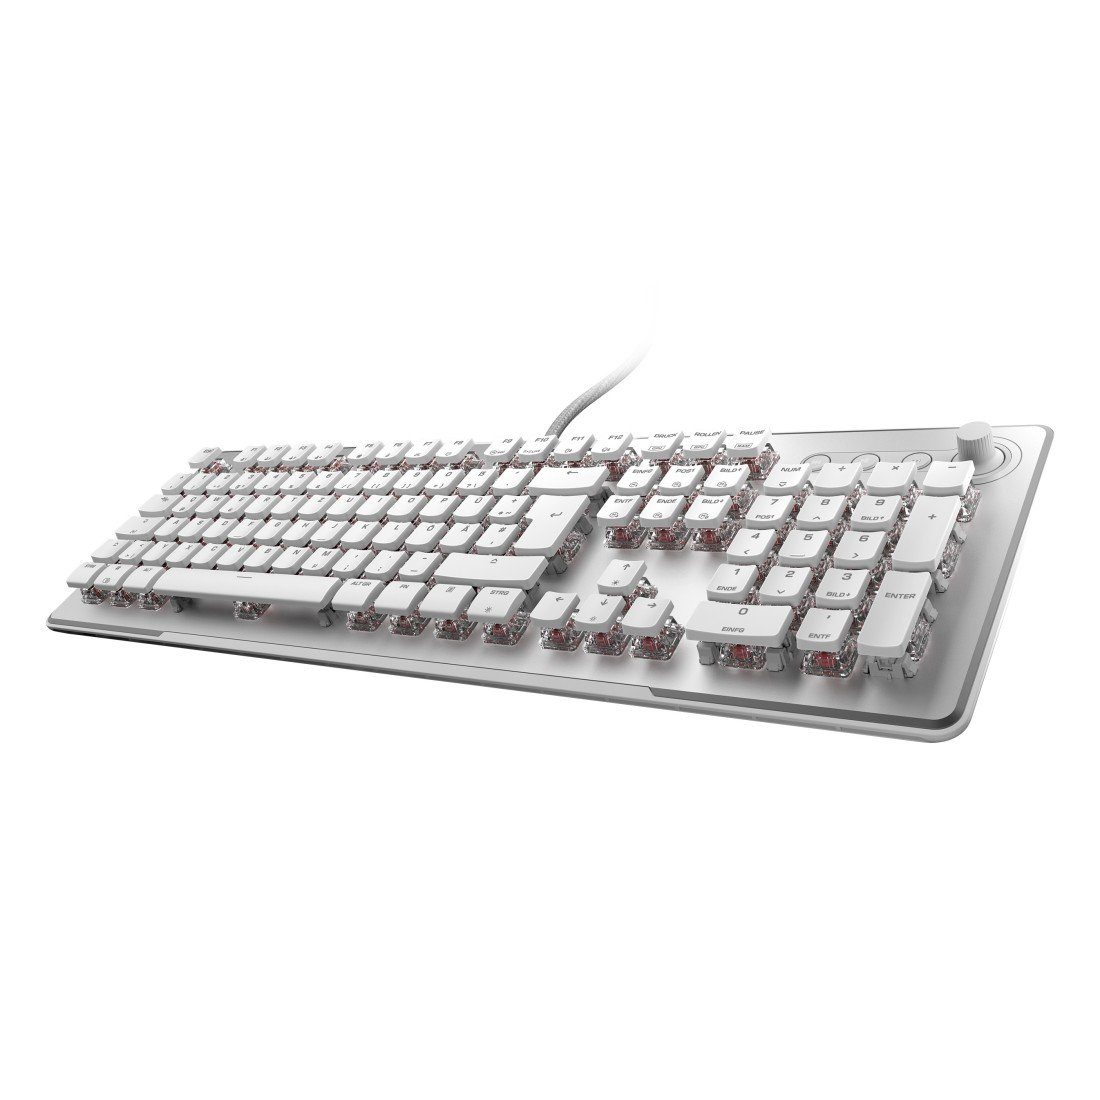 ROCCAT Gaming-Tastatur "Vulcan II Max", weiß Gaming-Tastatur mechanische, lineare Tasten